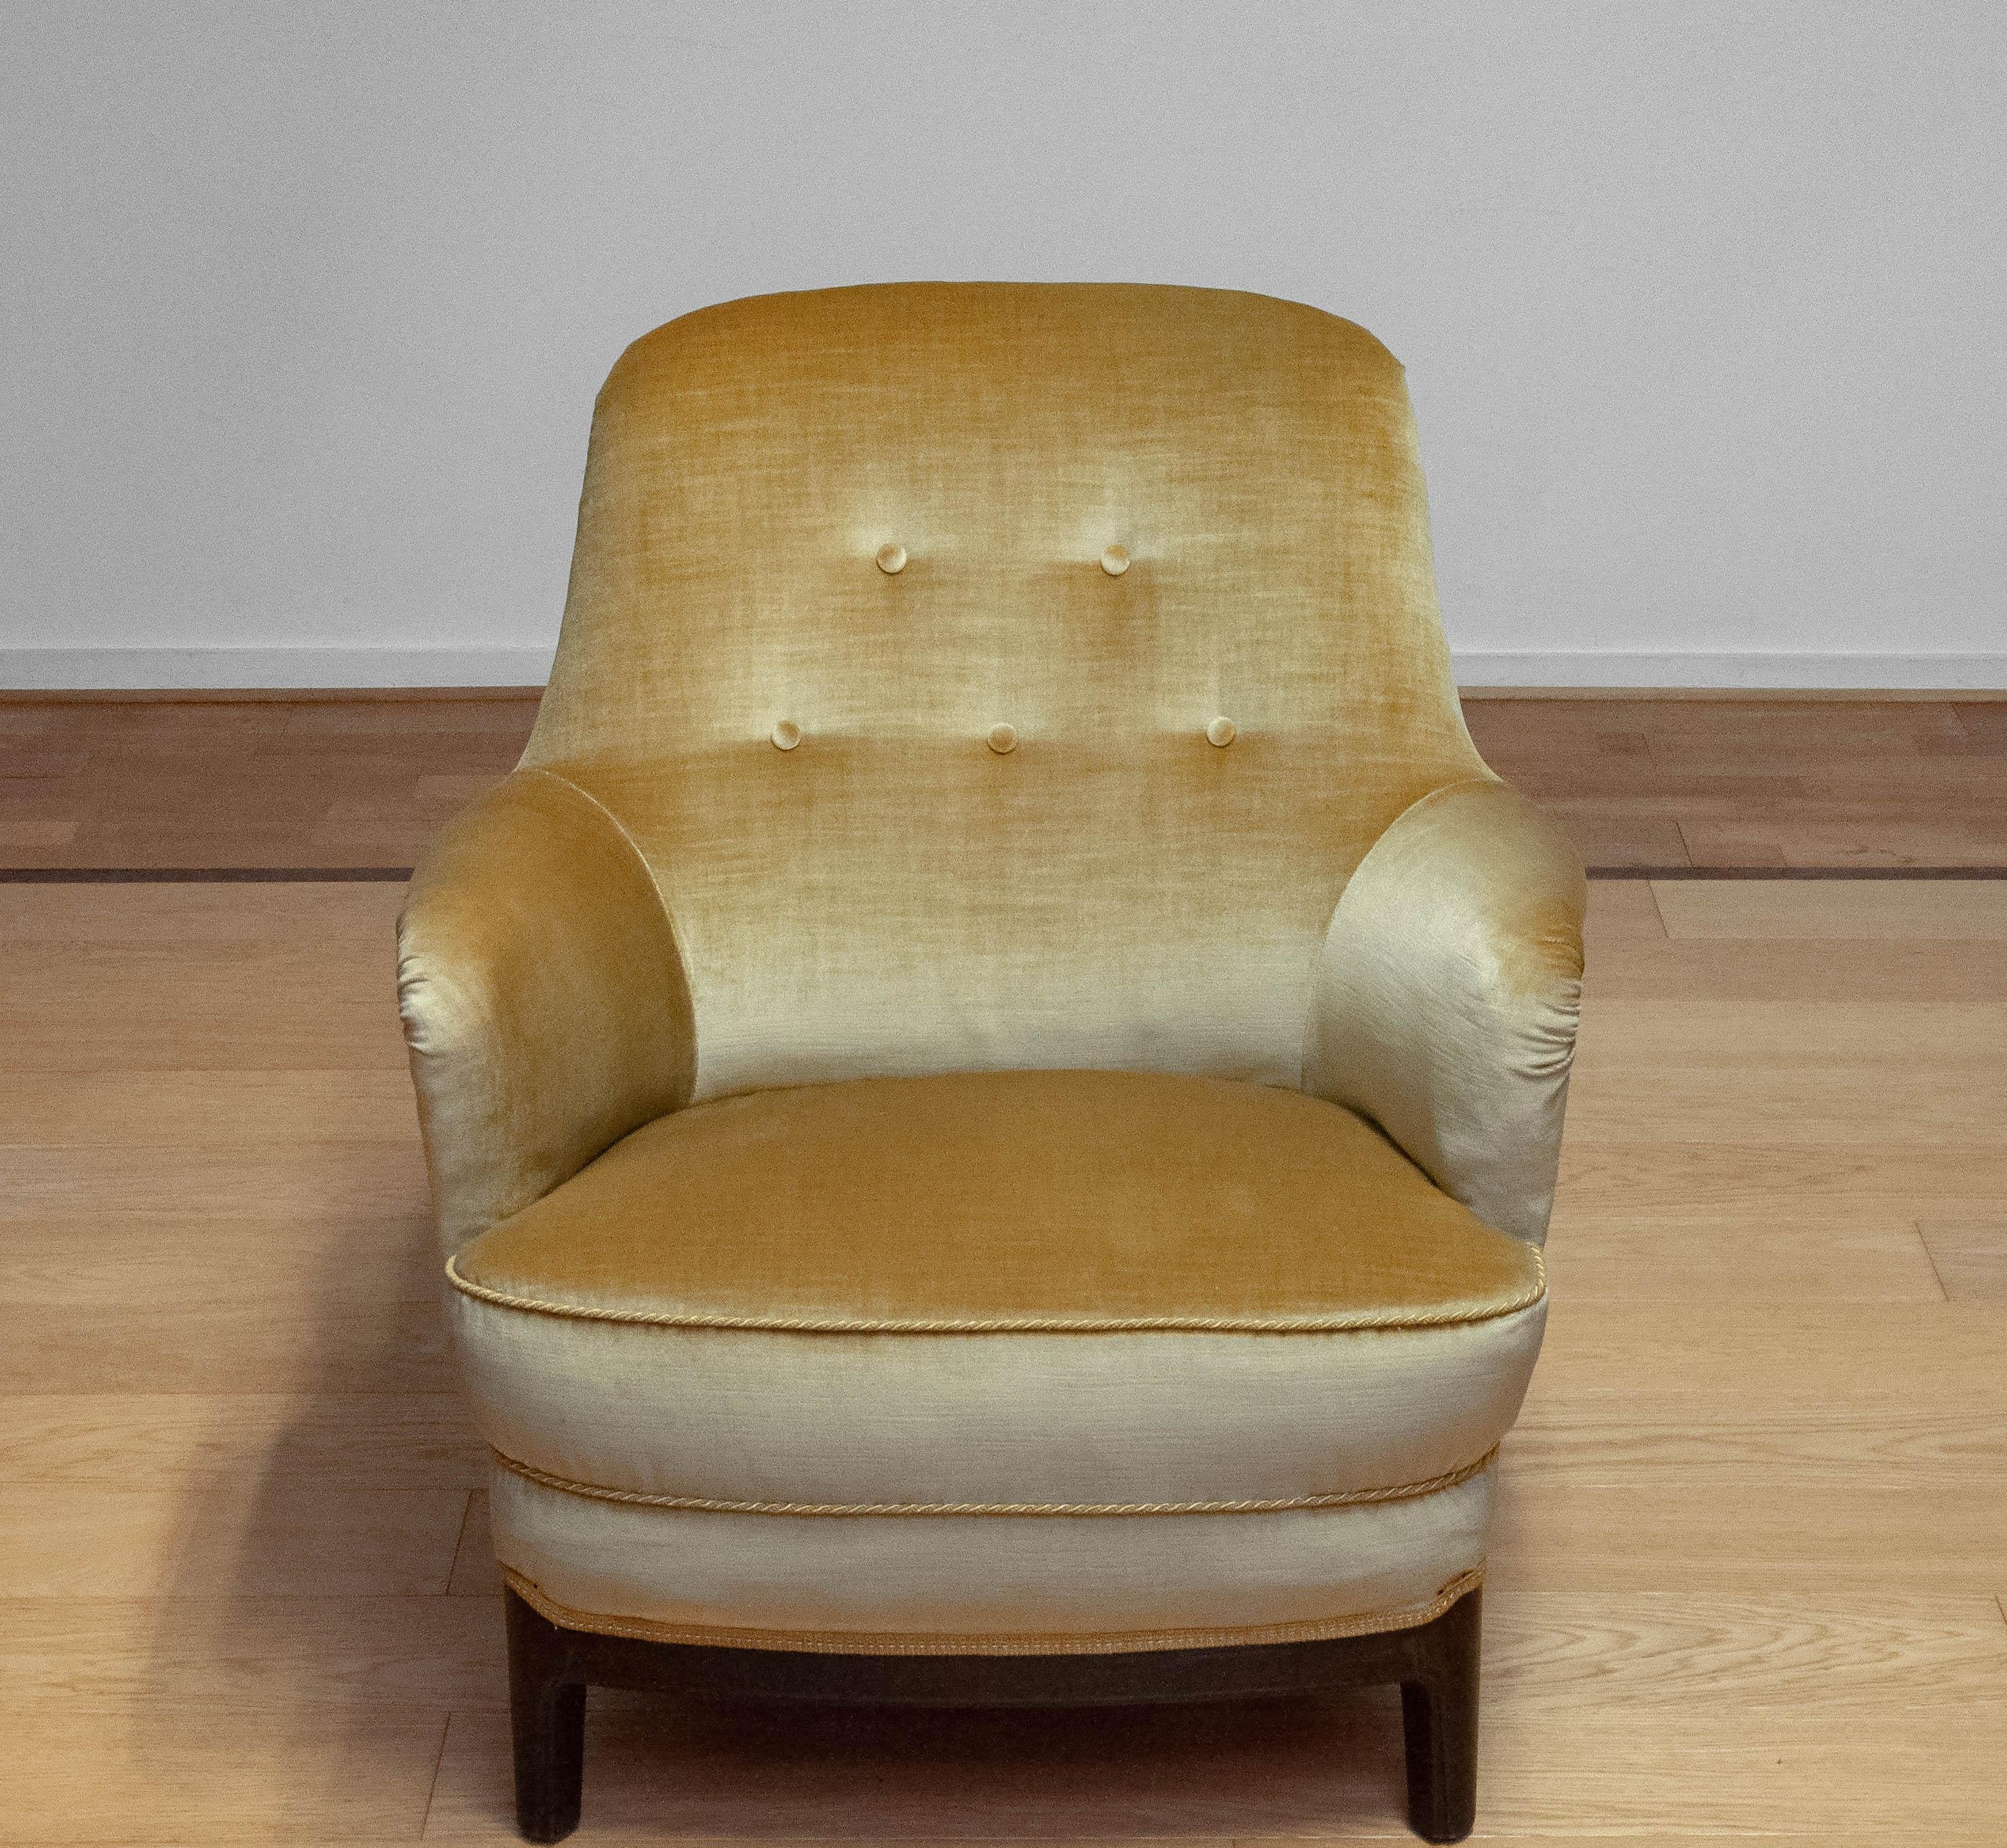 1940s Gold Colored Velvet Upholstered Lounge Chair By Carl Malmsten Sweden For Sale 2